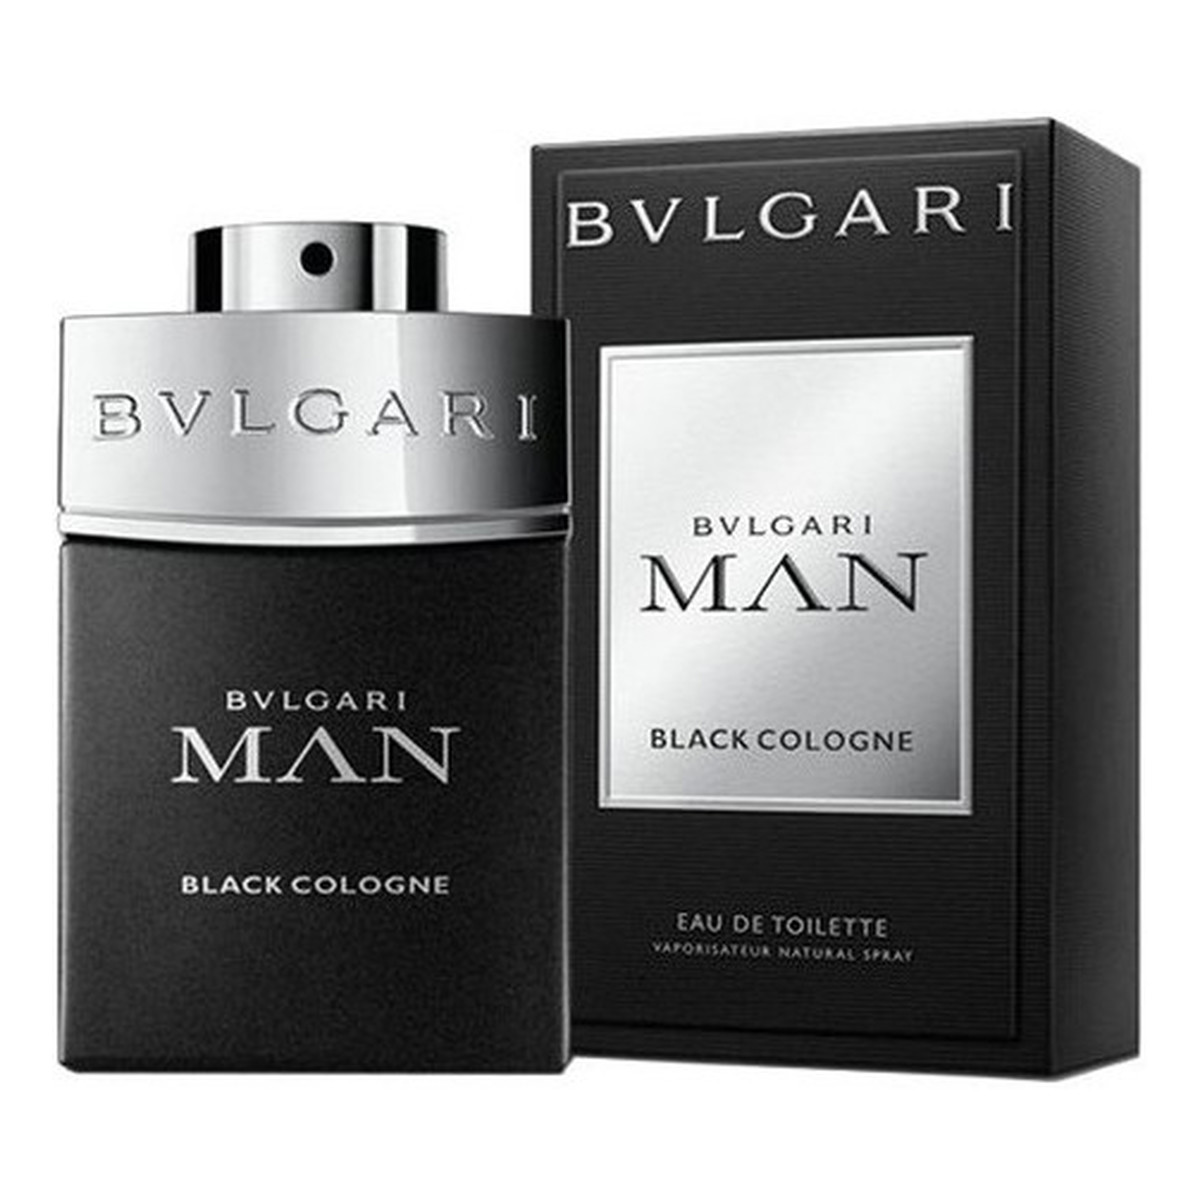 Bvlgari Man Black Cologne woda toaletowa 100ml